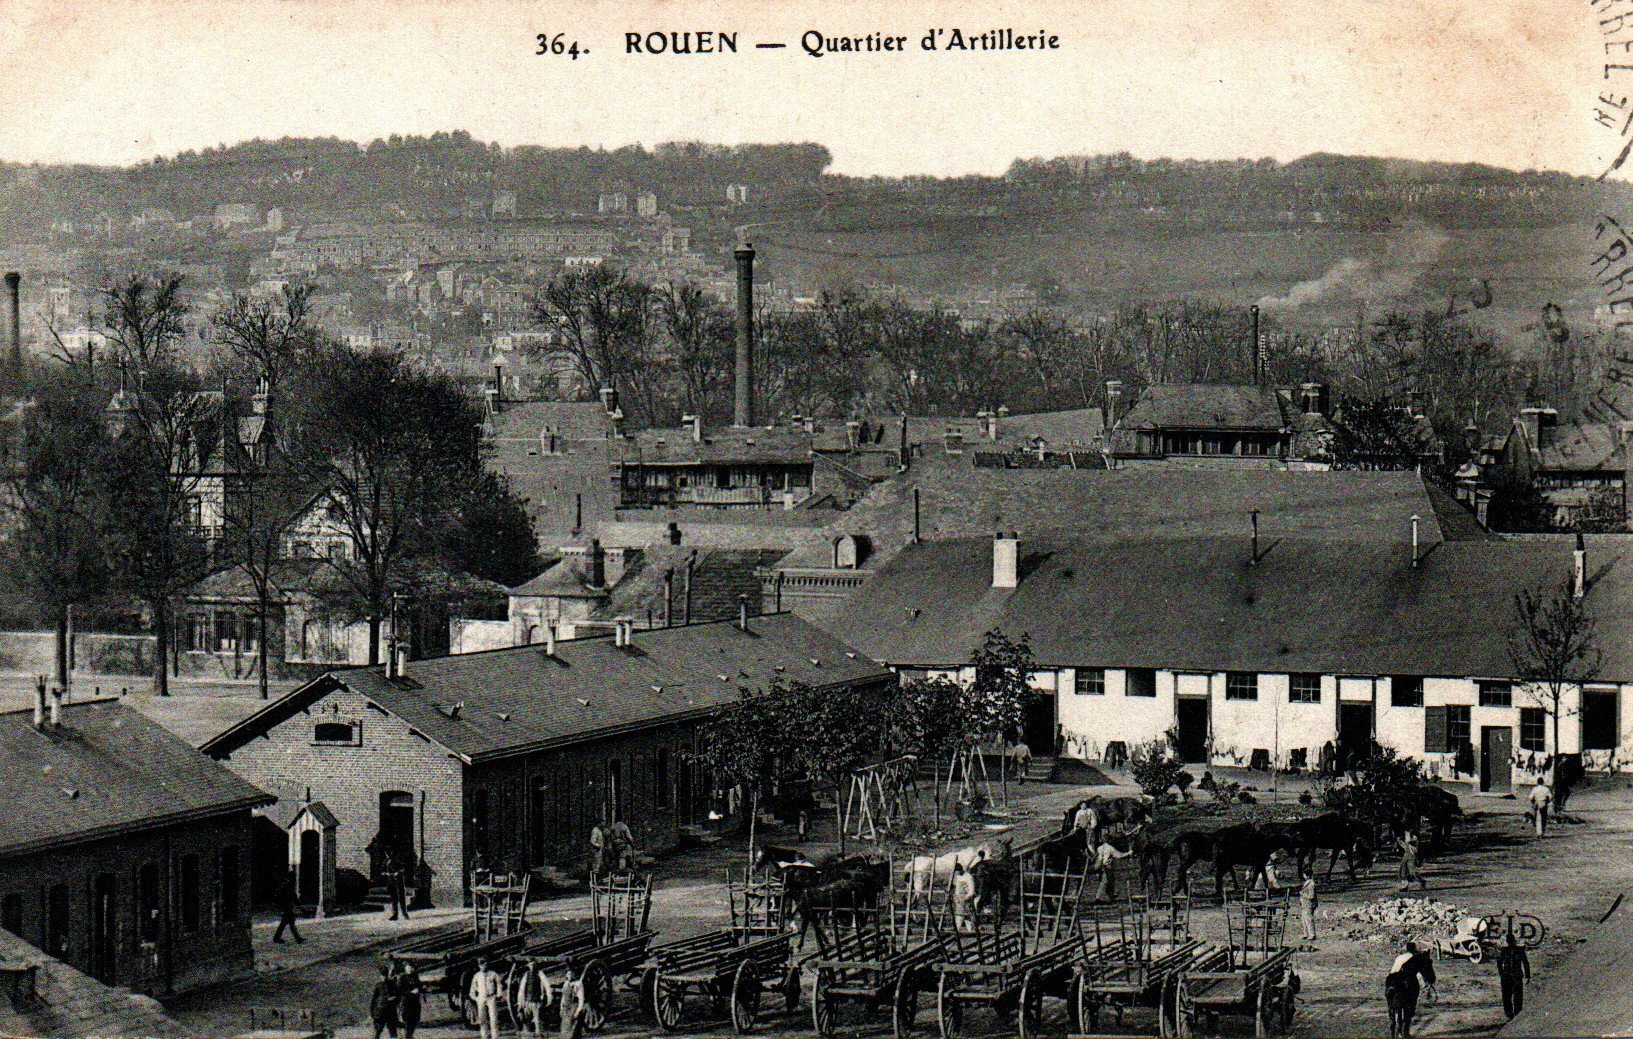 Rouen, Quartier d'artillerie